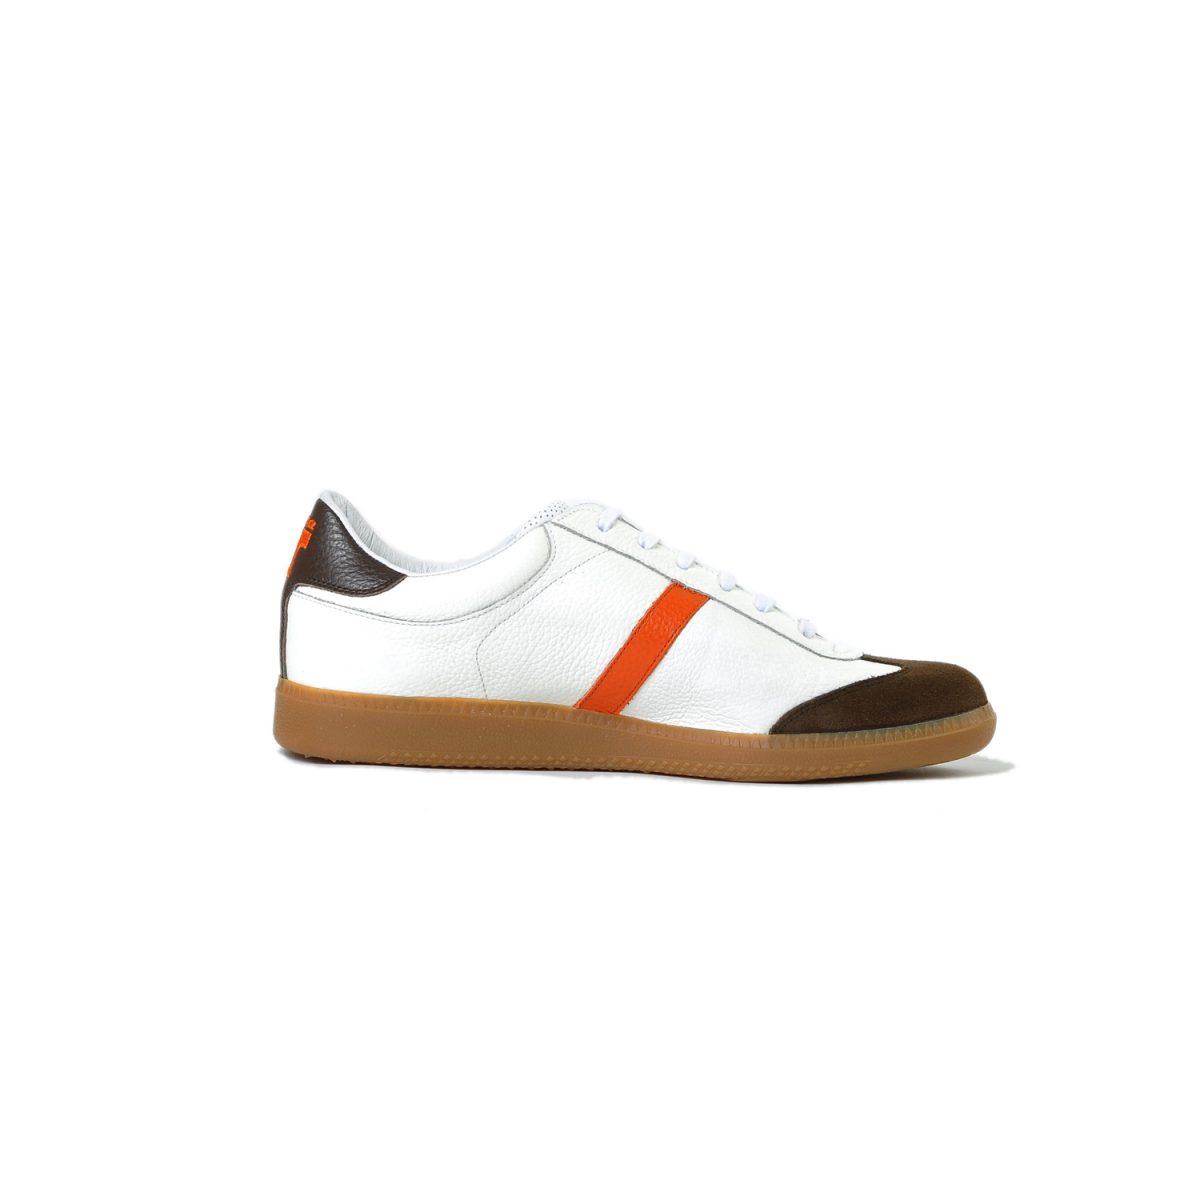 Tisza shoes - Compakt - White-brown-orange